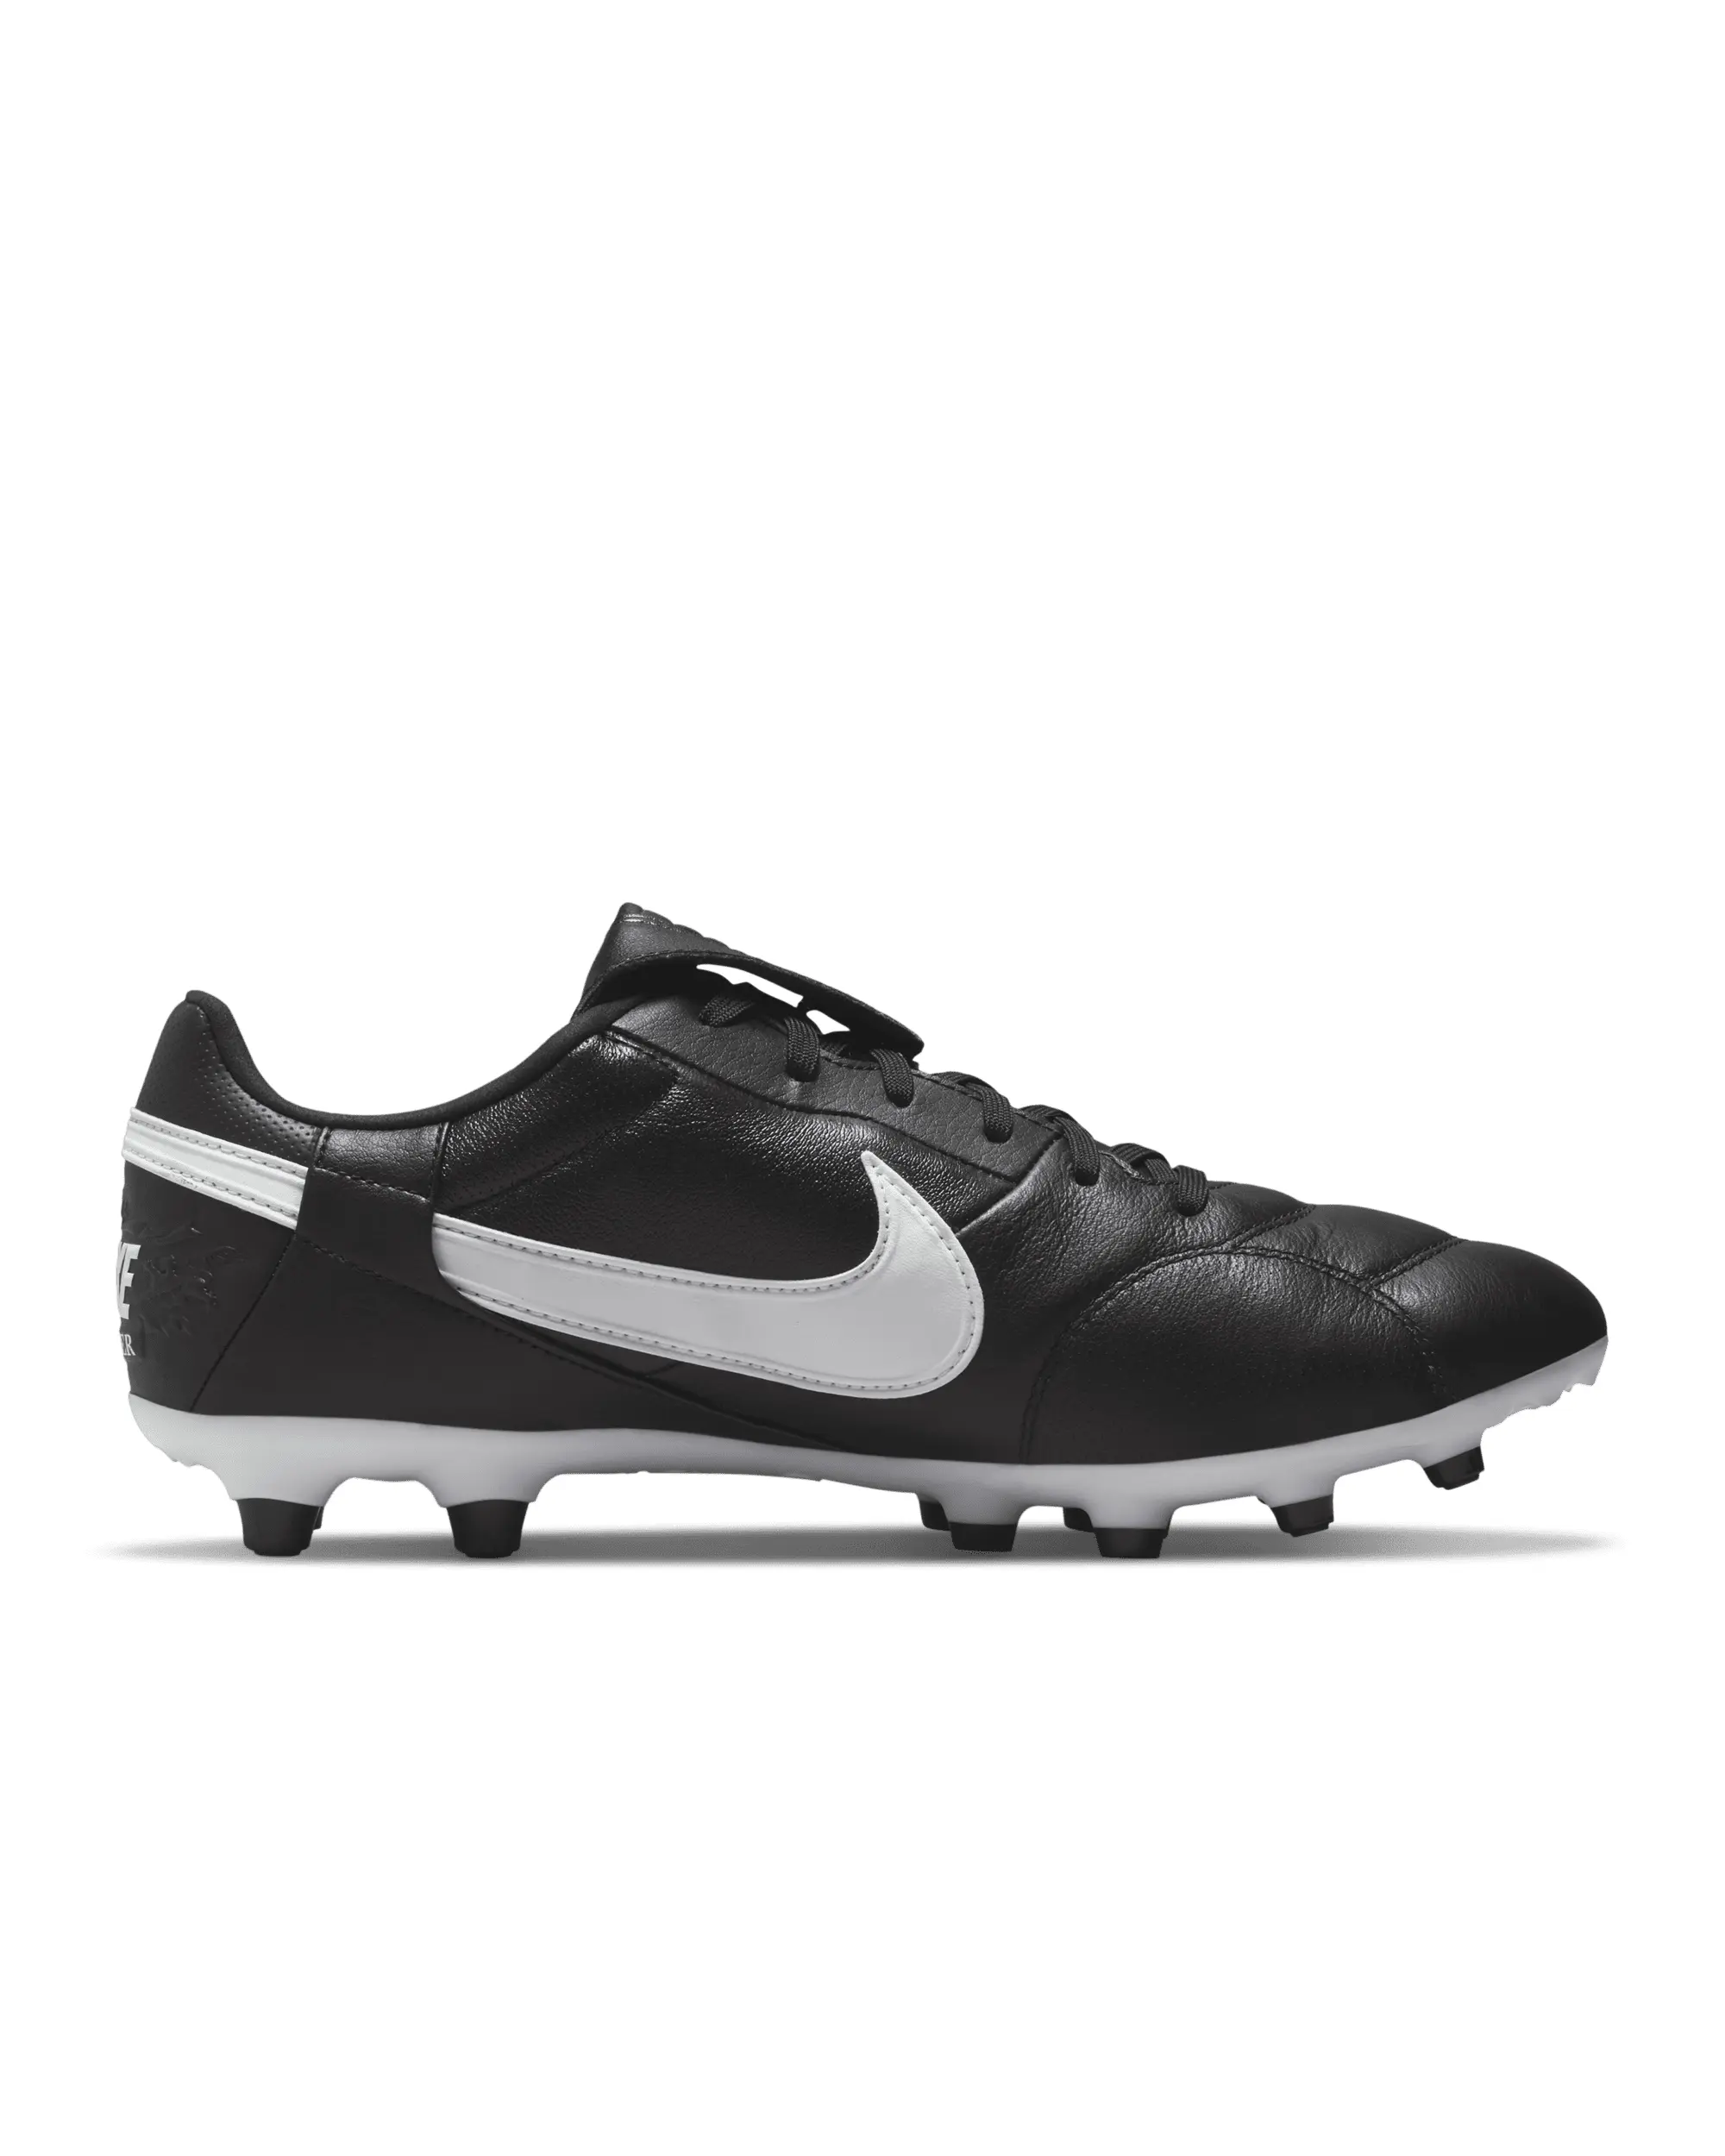 NikePremier 3 Firm-Ground Football Boot - Black